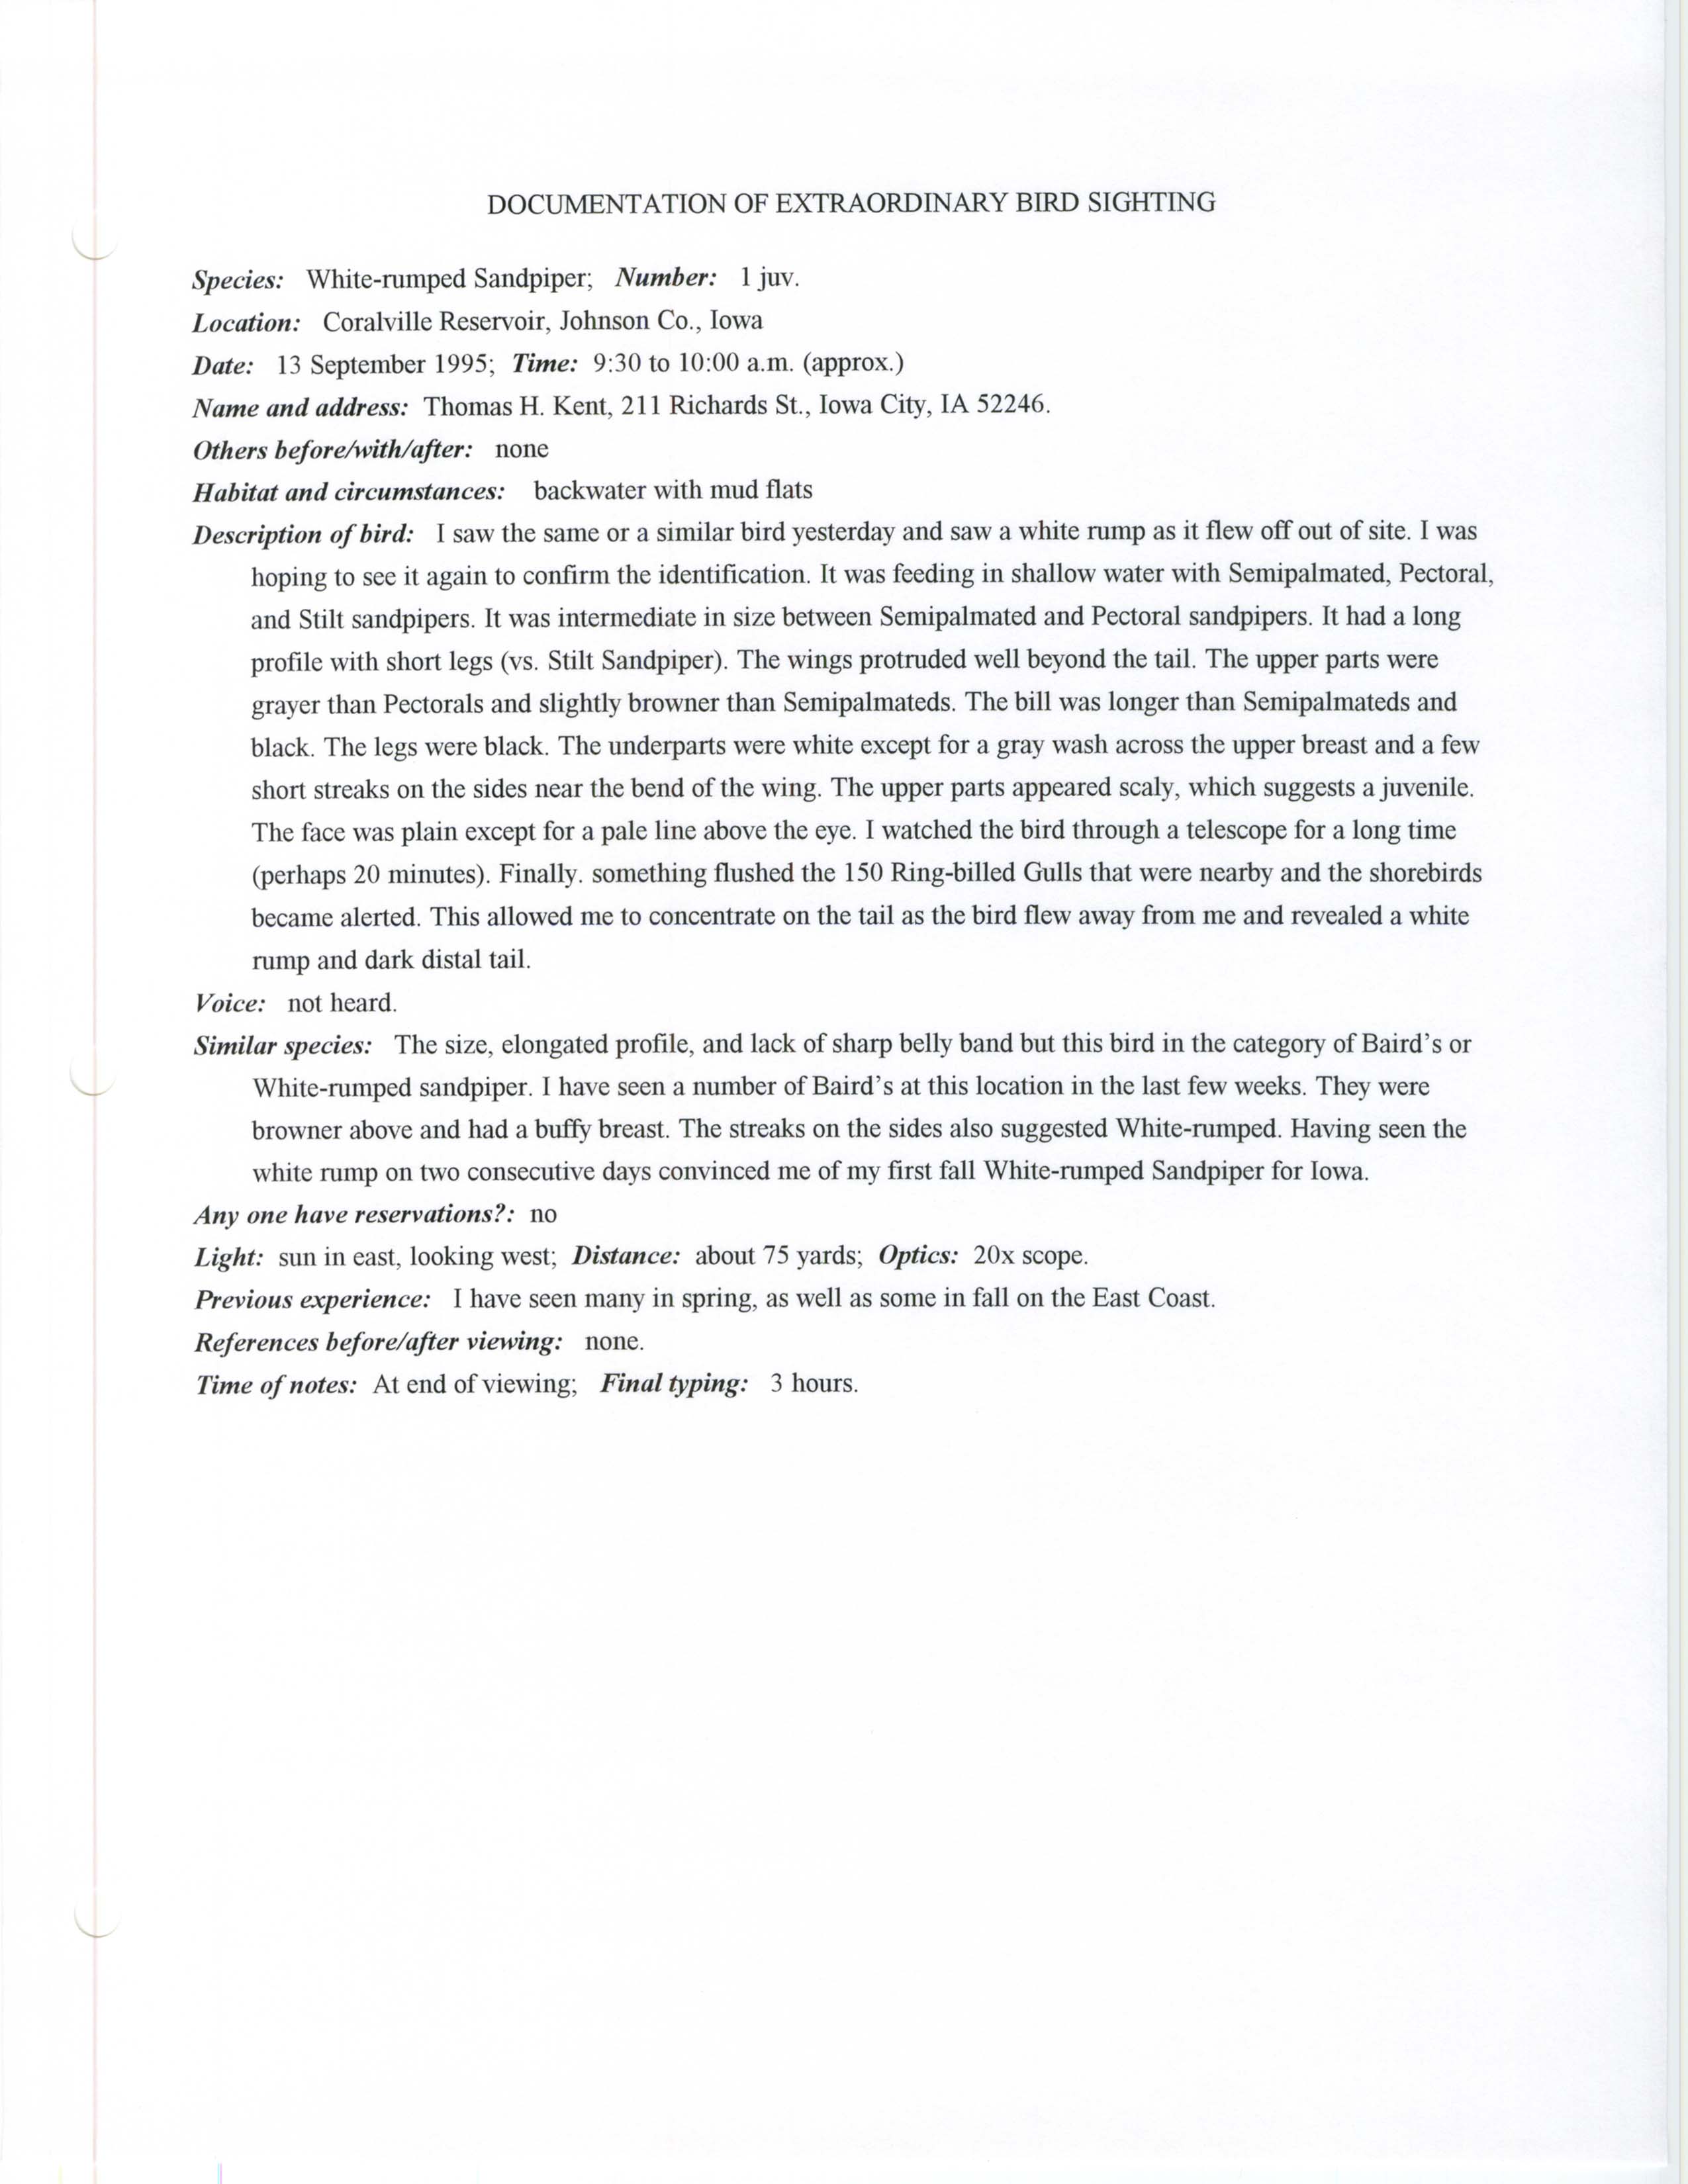 Rare bird documentation form for White-rumped Sandpiper at Coralville Reservoir, 1995